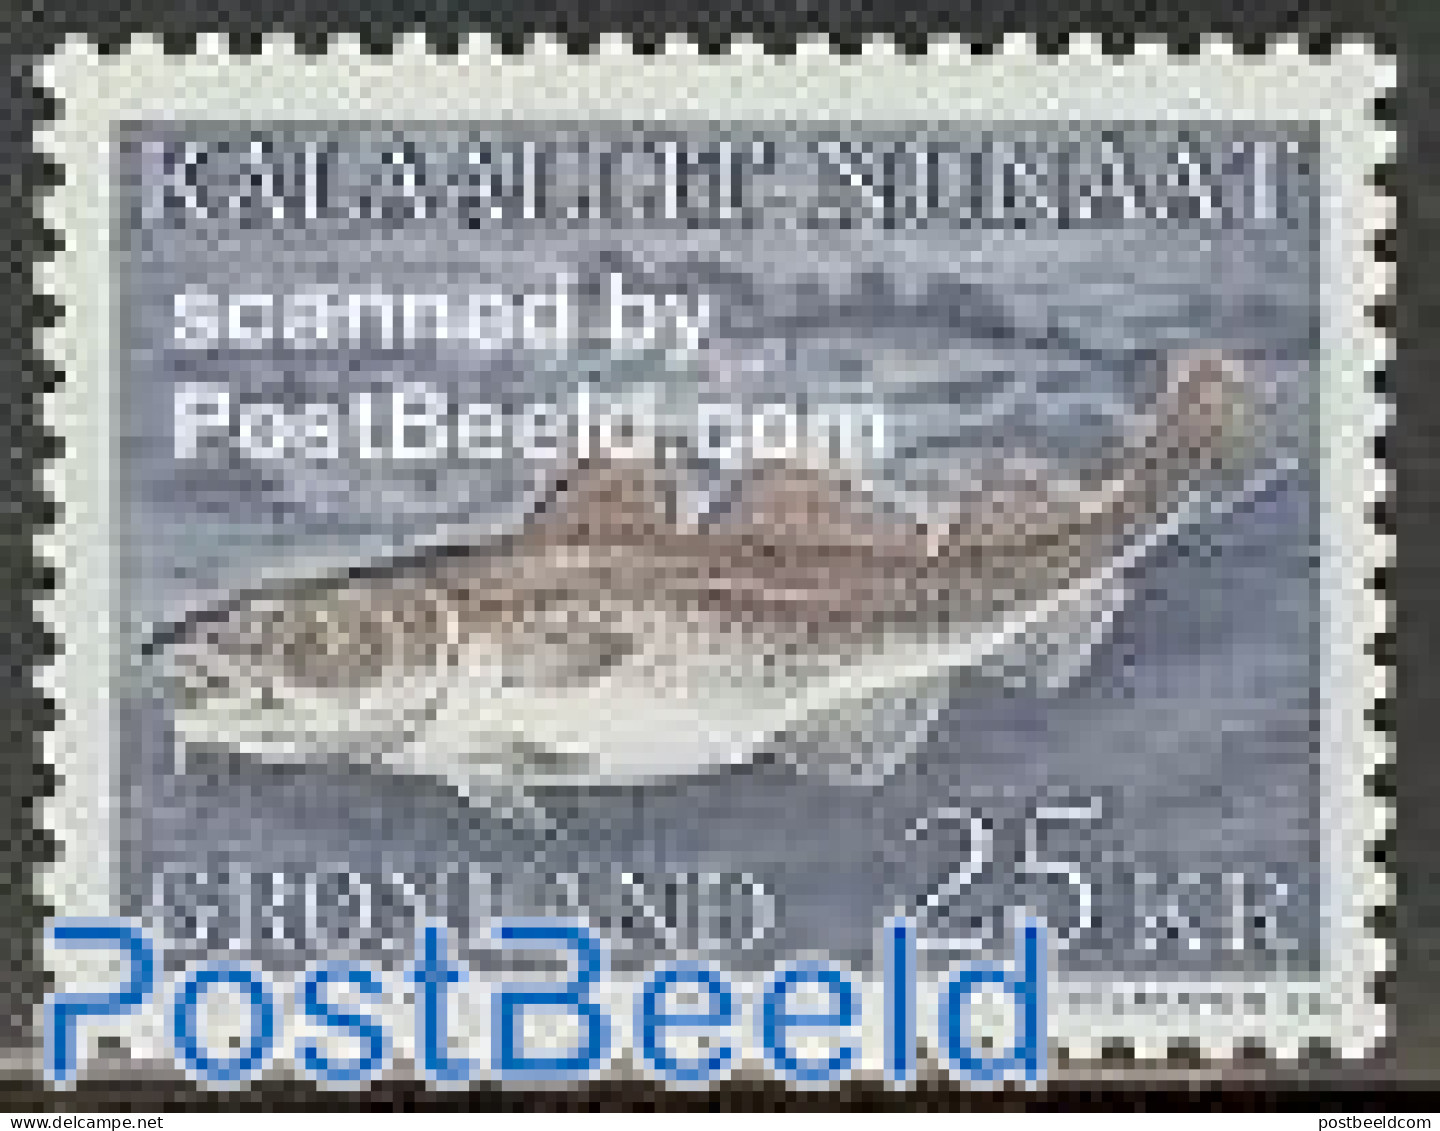 Greenland 1981 Fish 1v, Mint NH, Nature - Fish - Nuovi